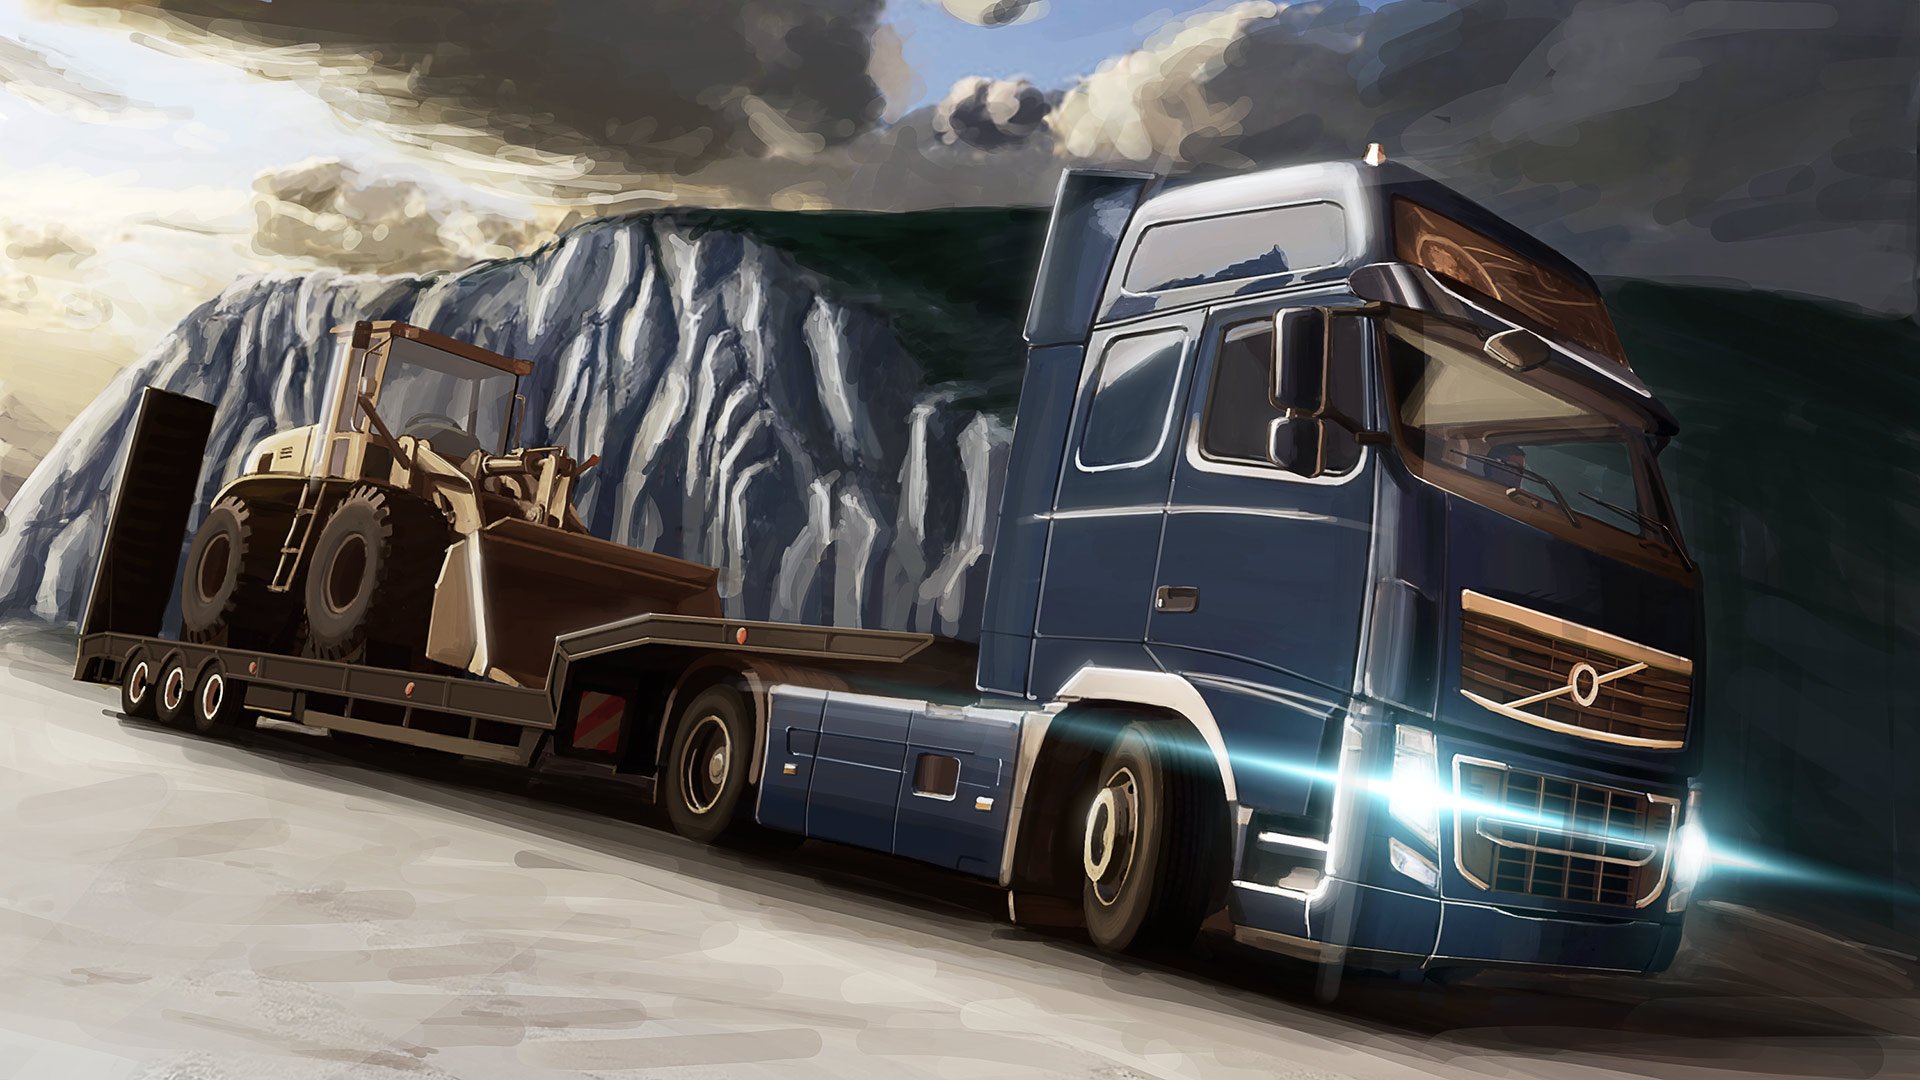  Euro  Truck  Simulator  2  HD Wallpaper  Background Image 